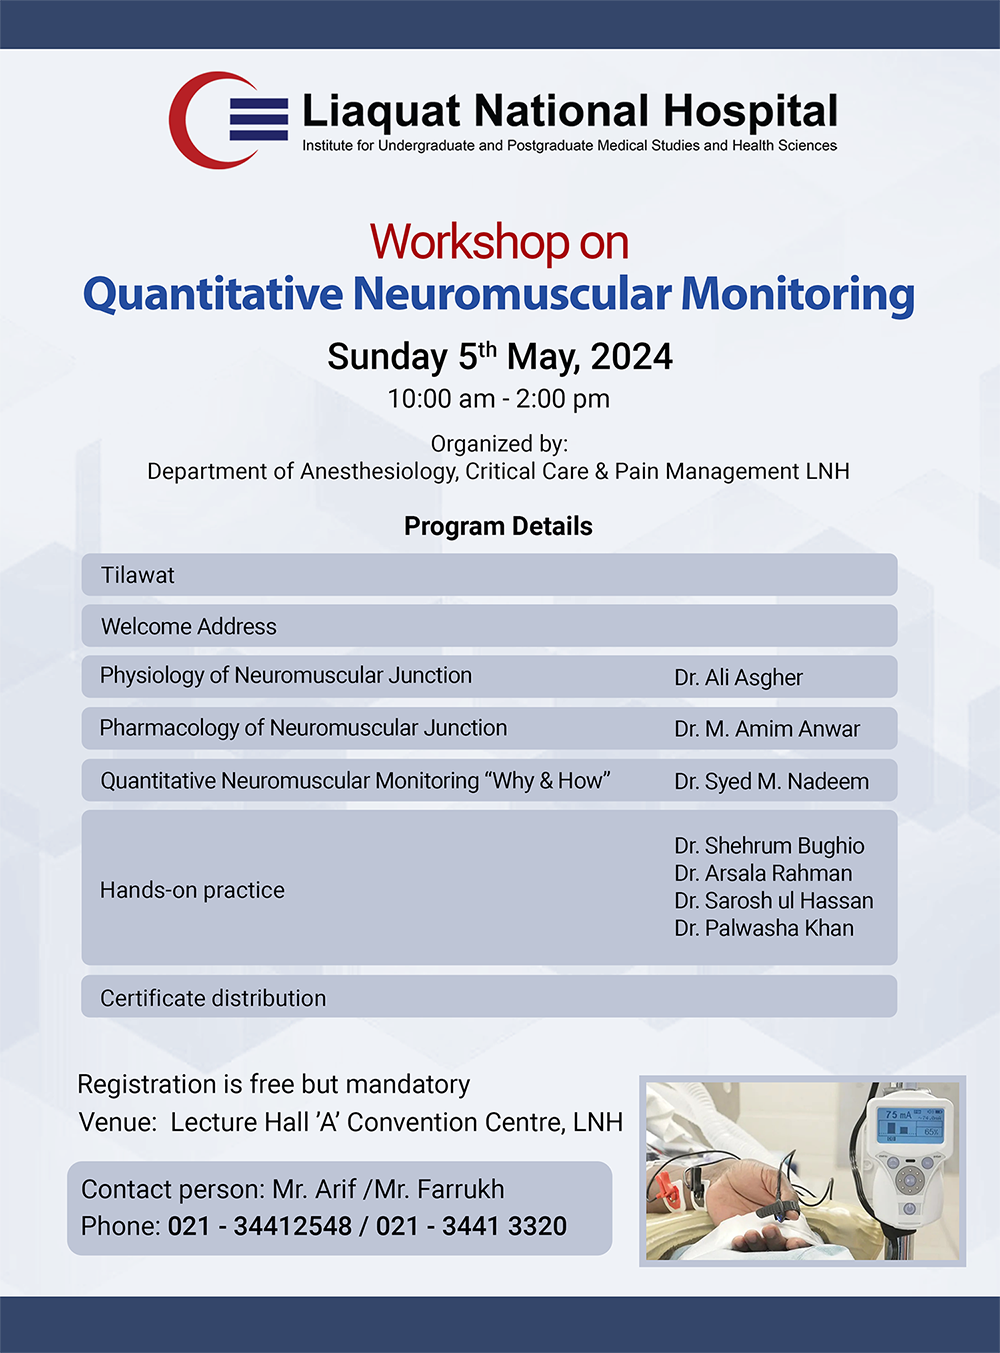 Workshop on Quantitative Neuromuscular Monitoring, May 5, 2024